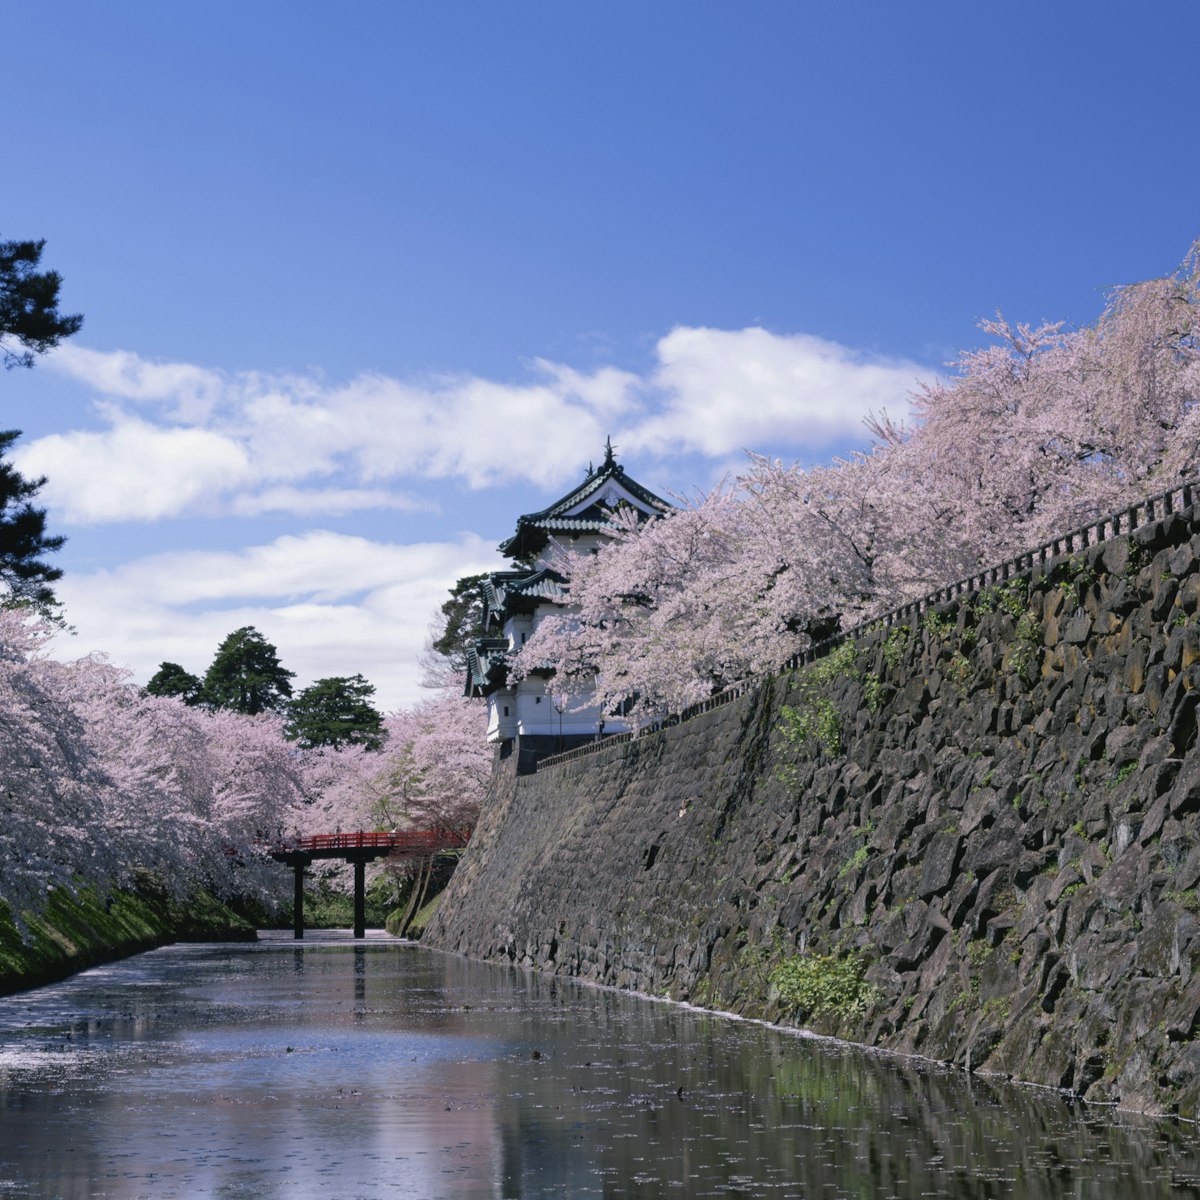 Japan, Aomori Prefecture, Hirosaki, Hirosaki Park, Cherry Blossom trees along moat